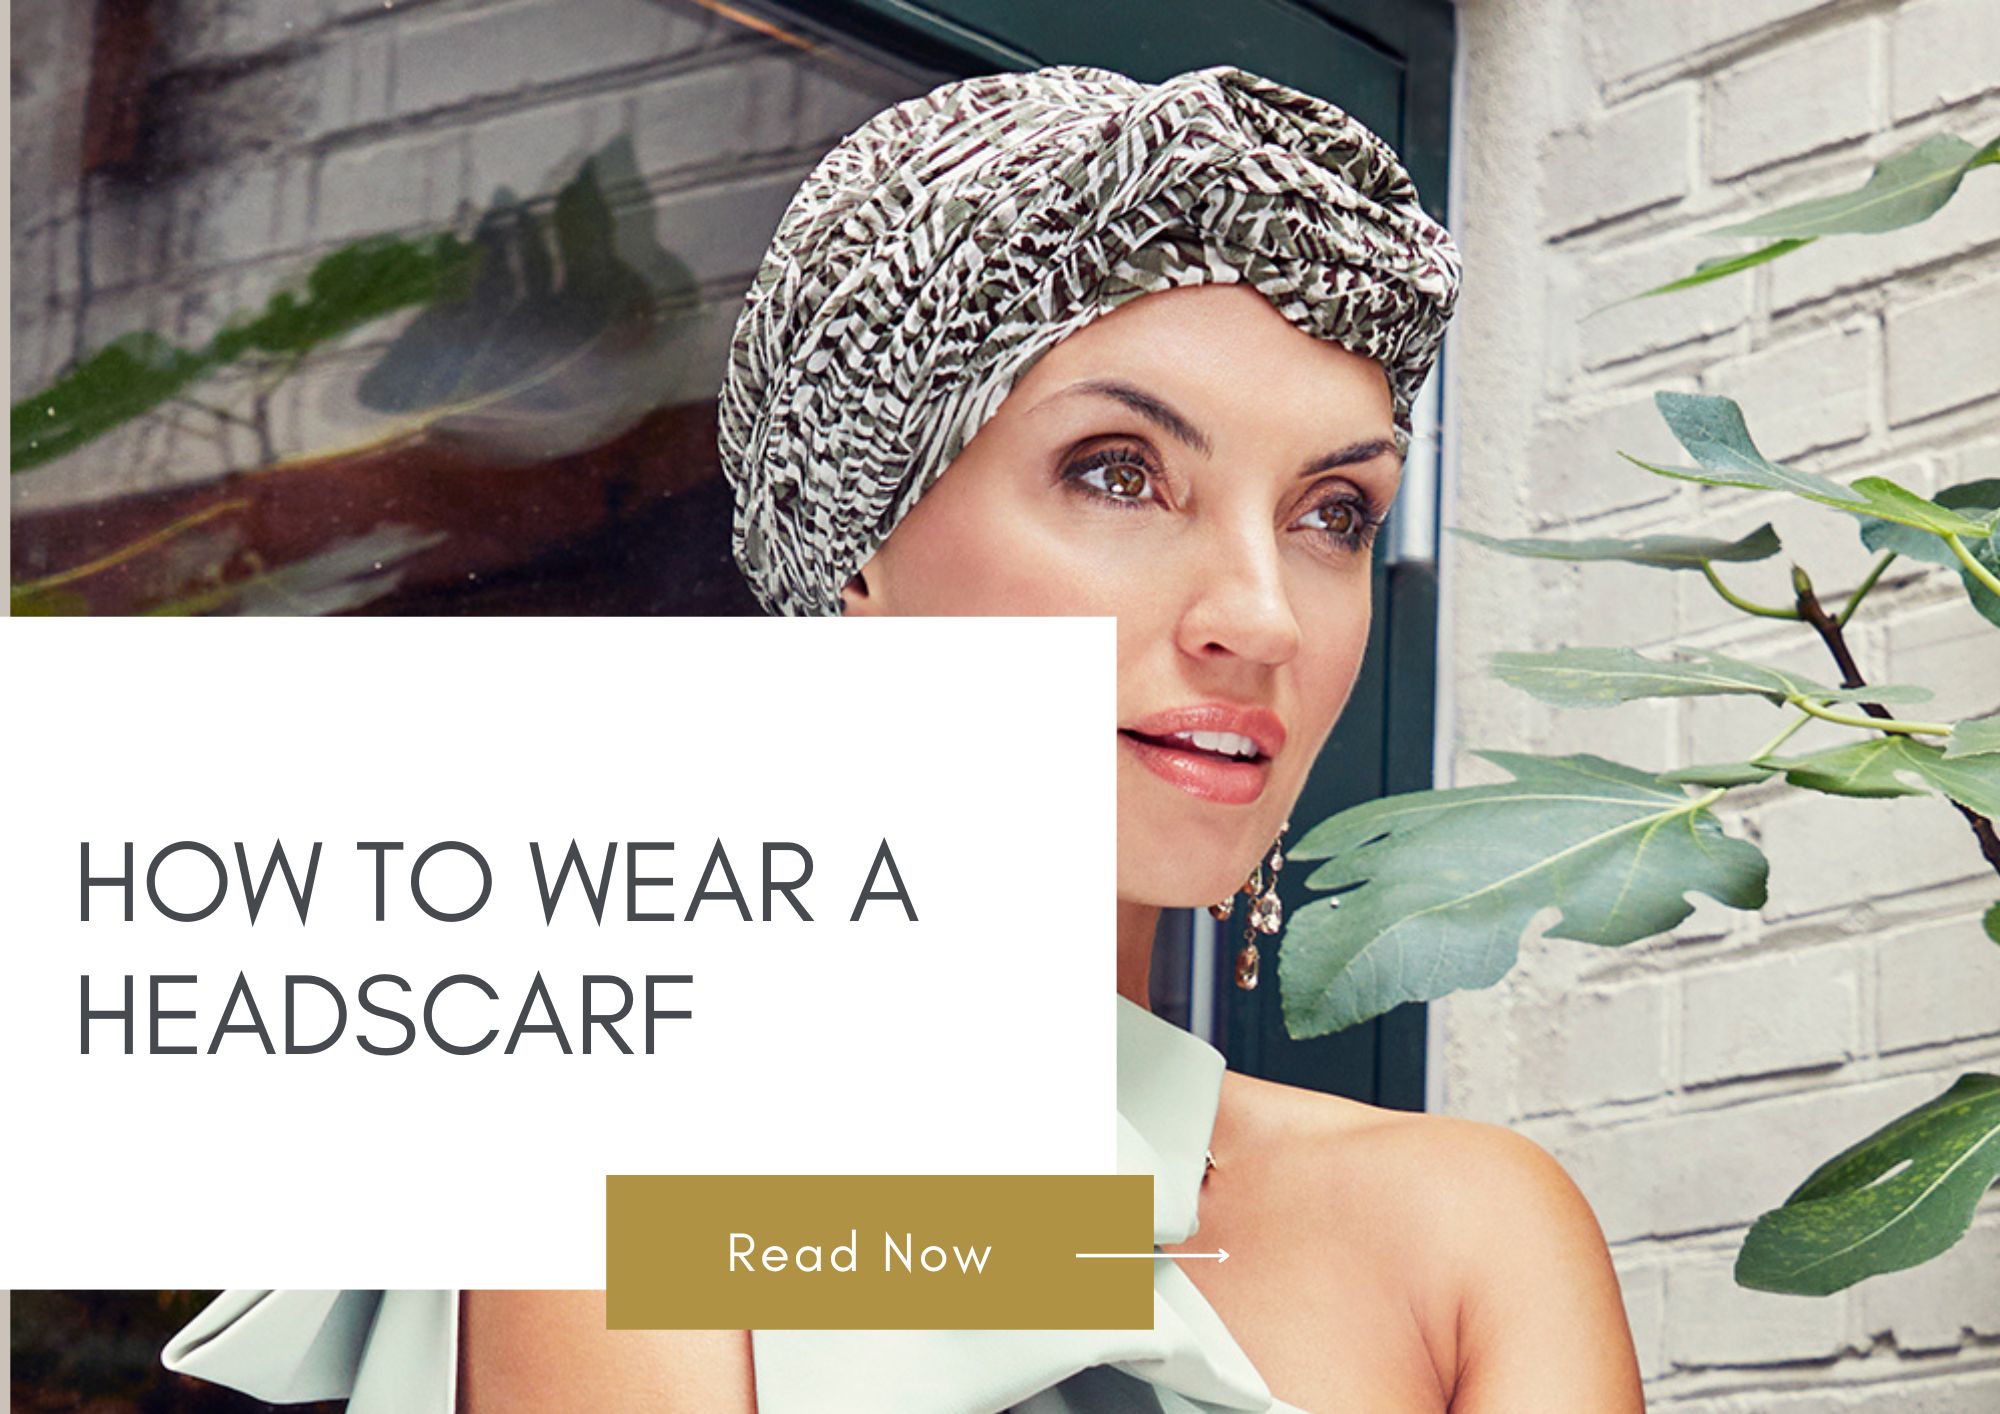 How to wear a headscarf